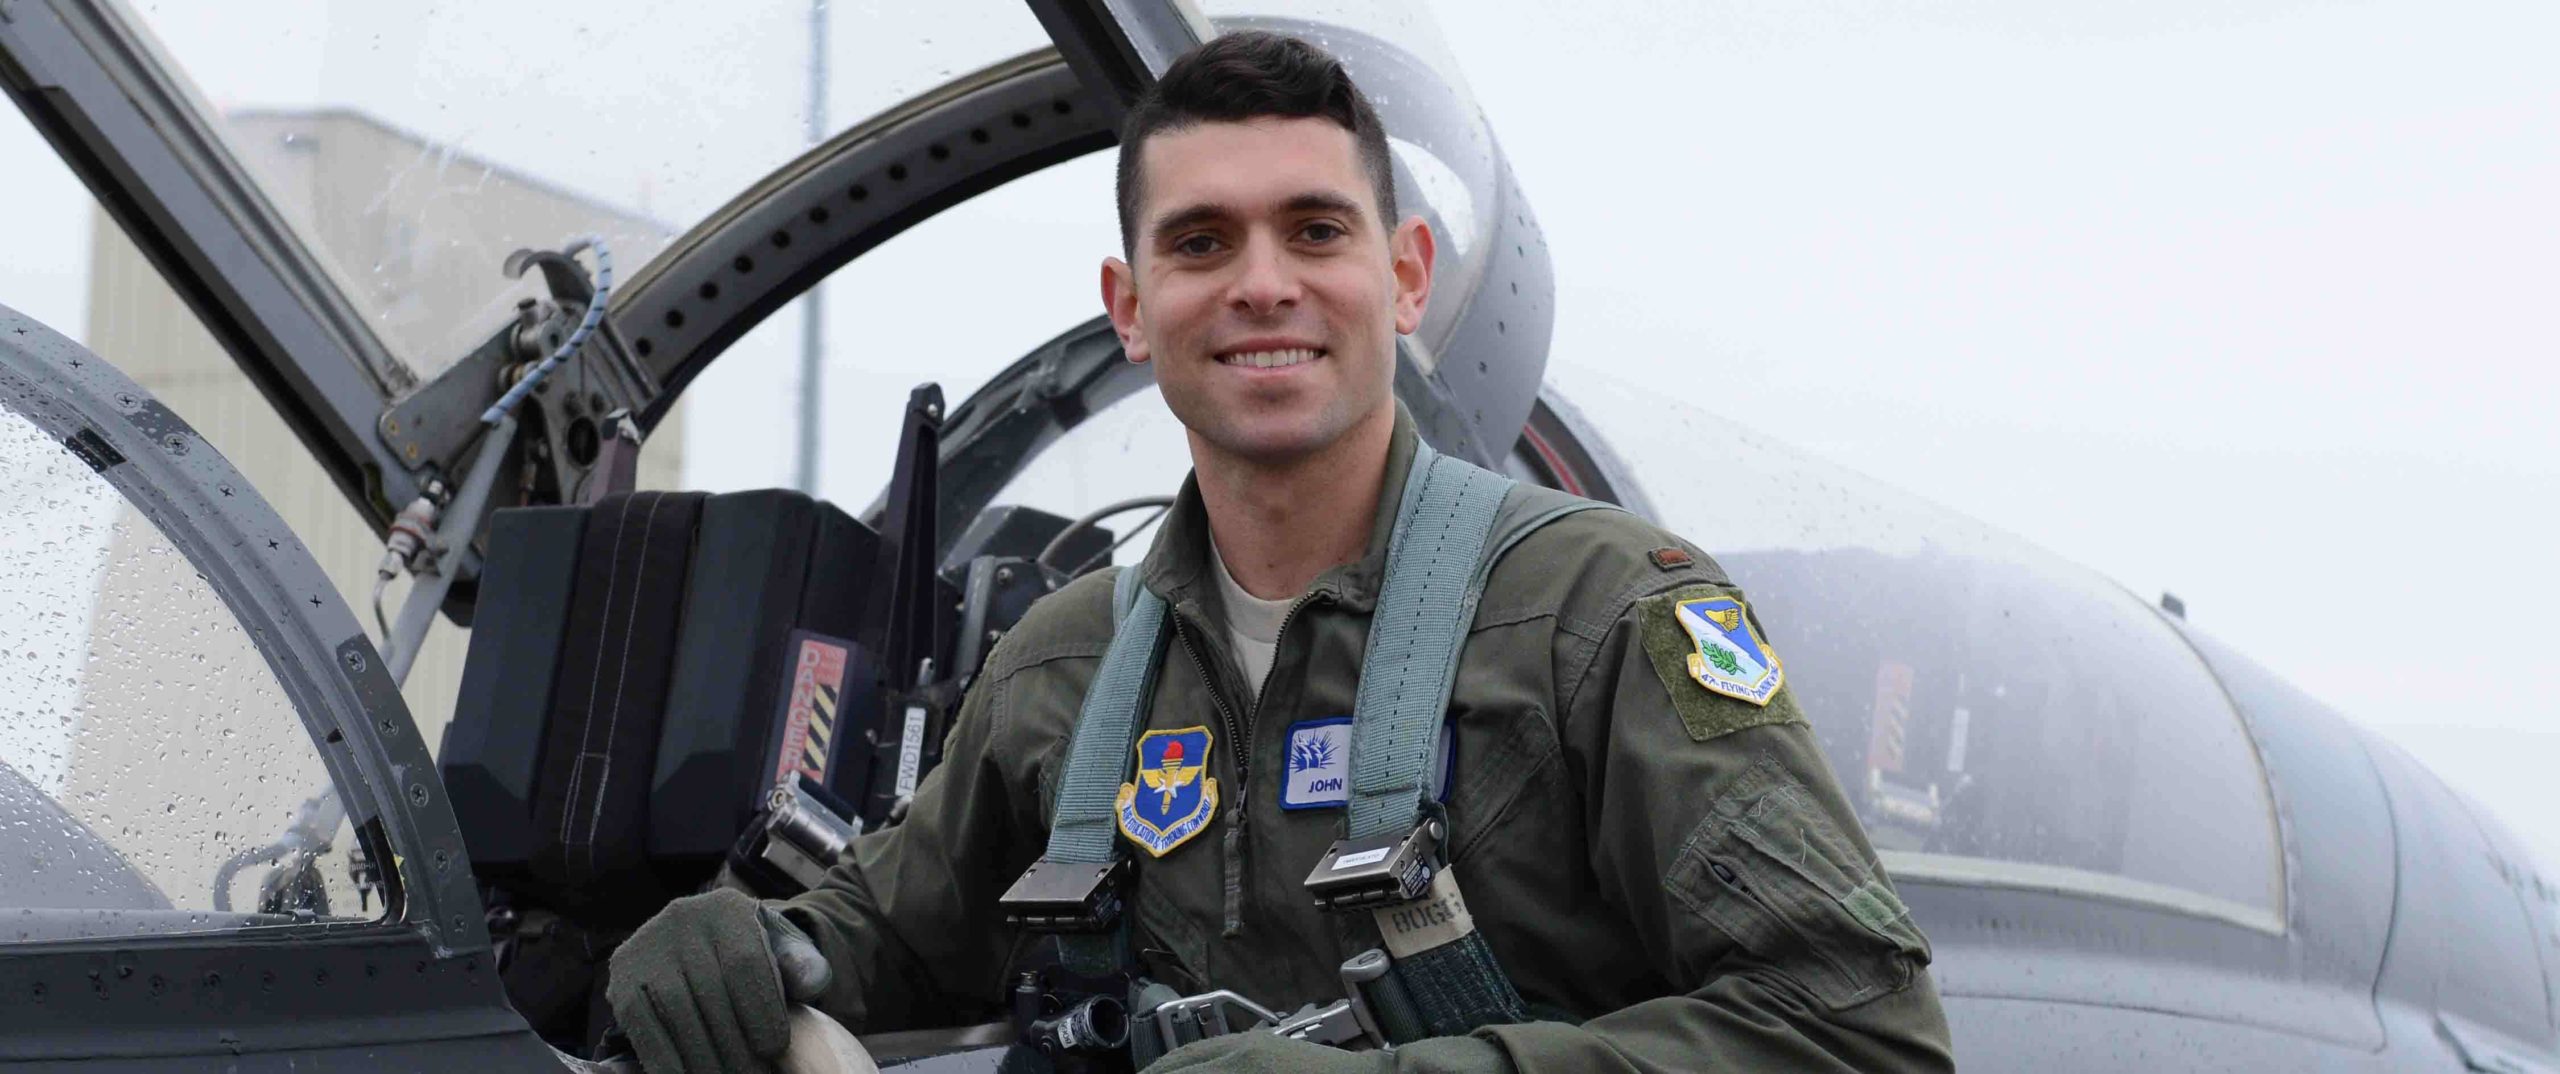 Air Force pilot, Baltimore Catholic school alum killed in crash